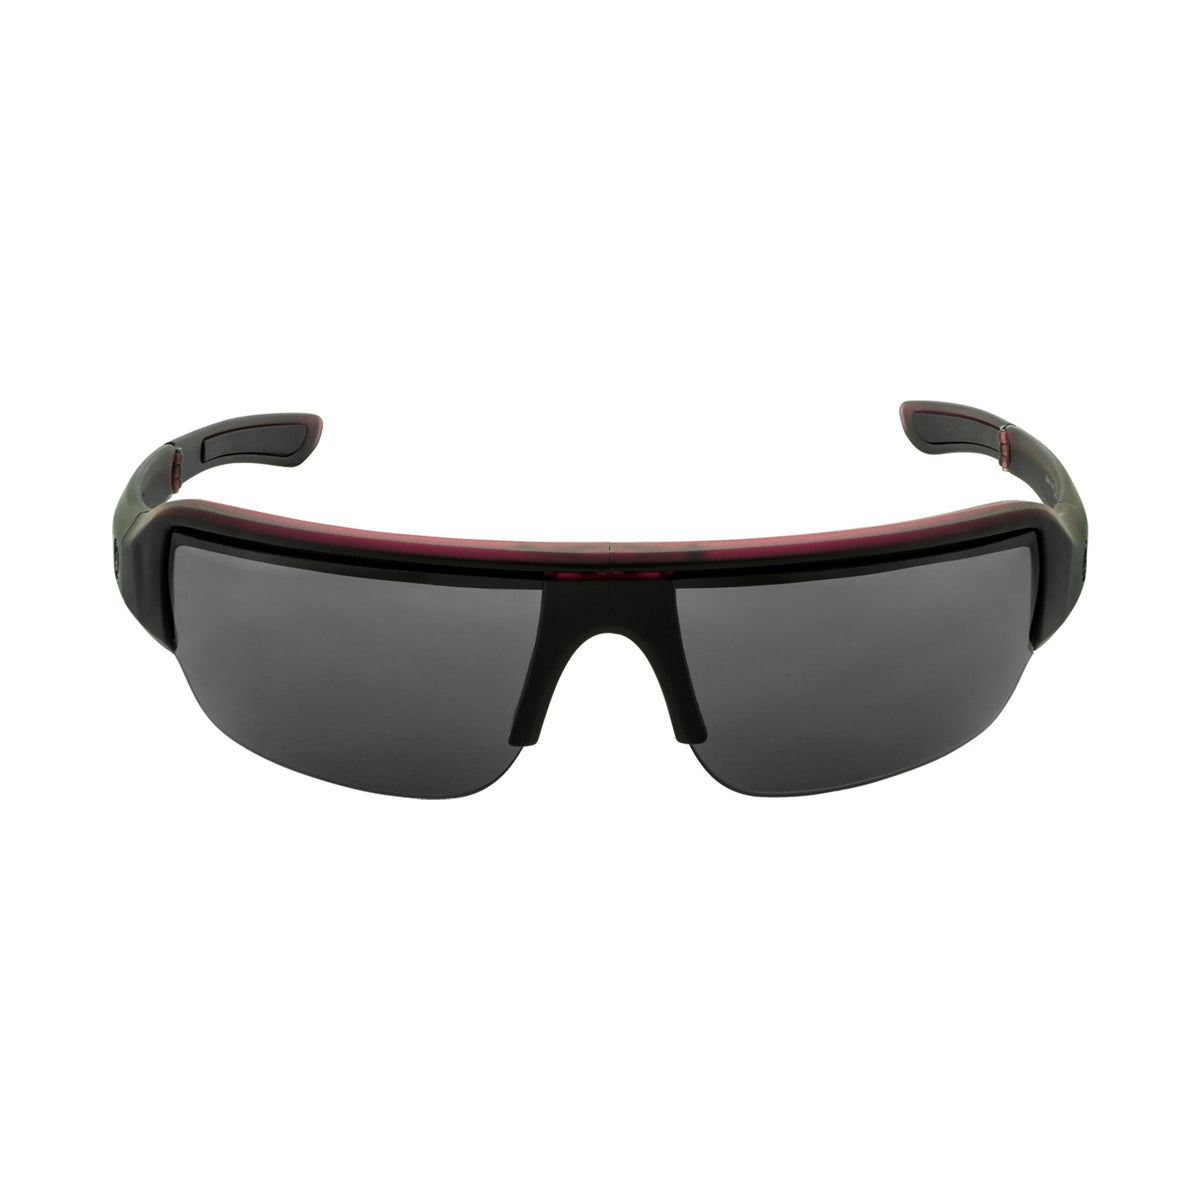 Popticals, Premium Compact Sunglasses, PopGun, 030010-LFGP, Polarized Sunglasses, Gloss Wine/Black Crystal Frame, Gray Lenses, Front View